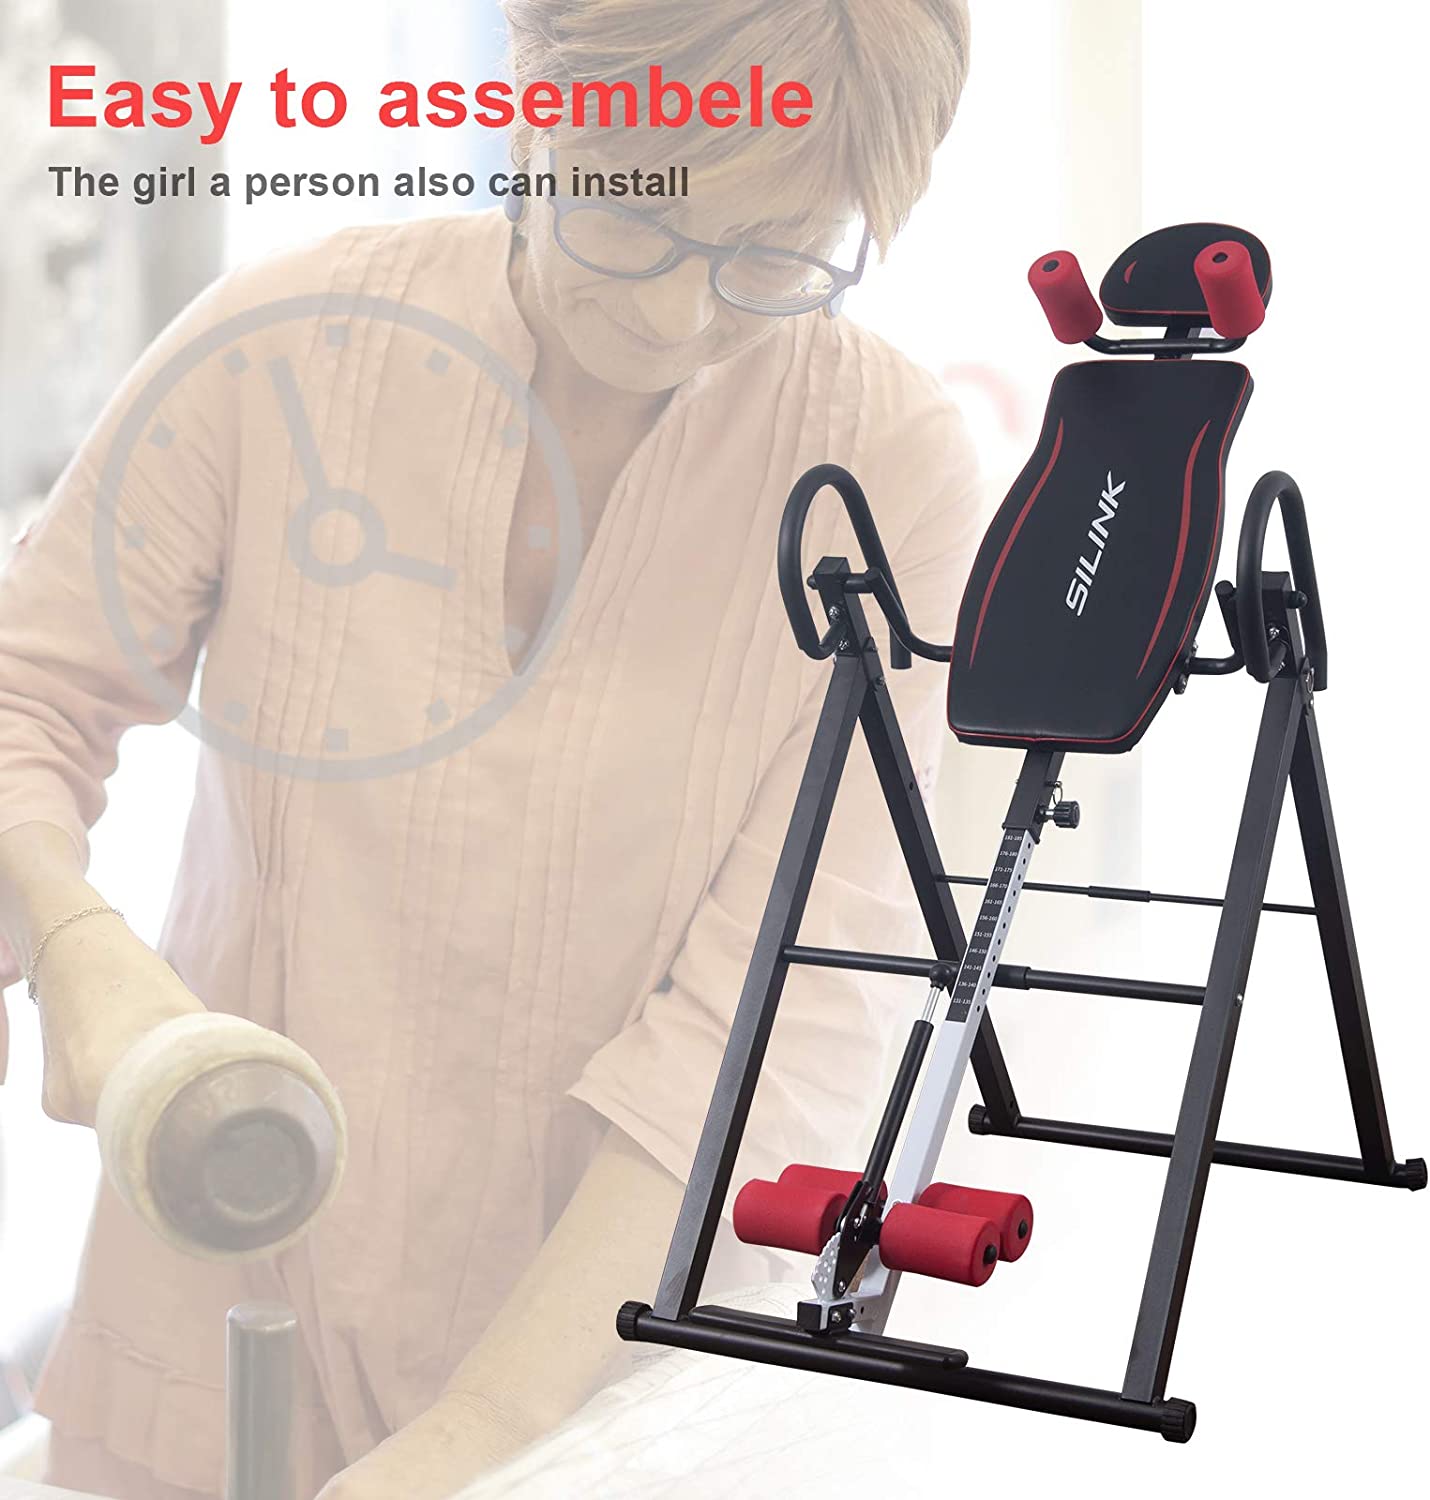 Heavy Duty Gravity Inversion Table, Adjustable Protective Strap Back Stretcher